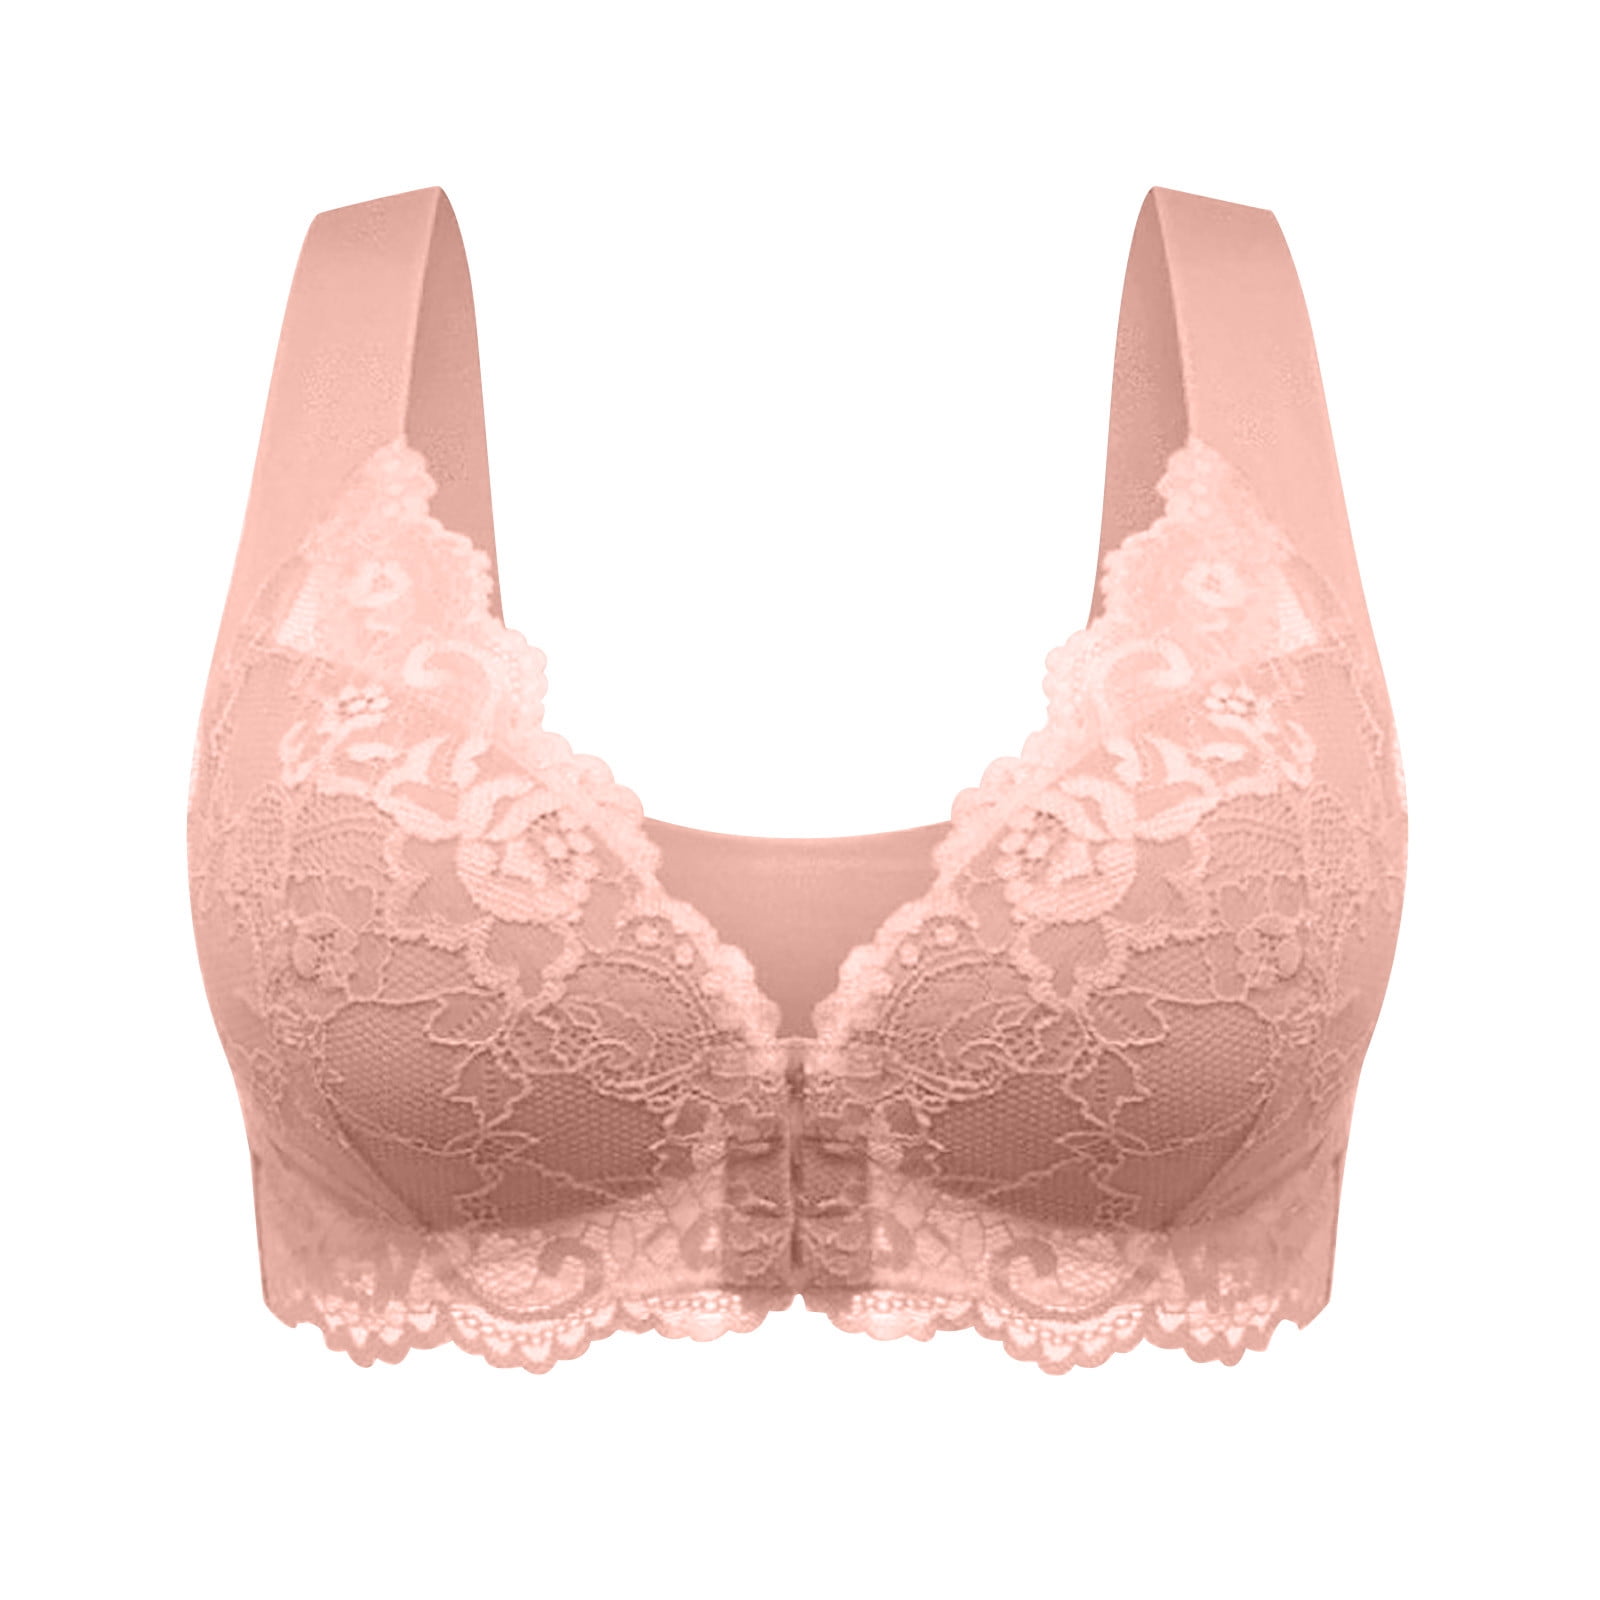 Xiushiren seamless lace trim bras for women padded bra 36B 38B 40B